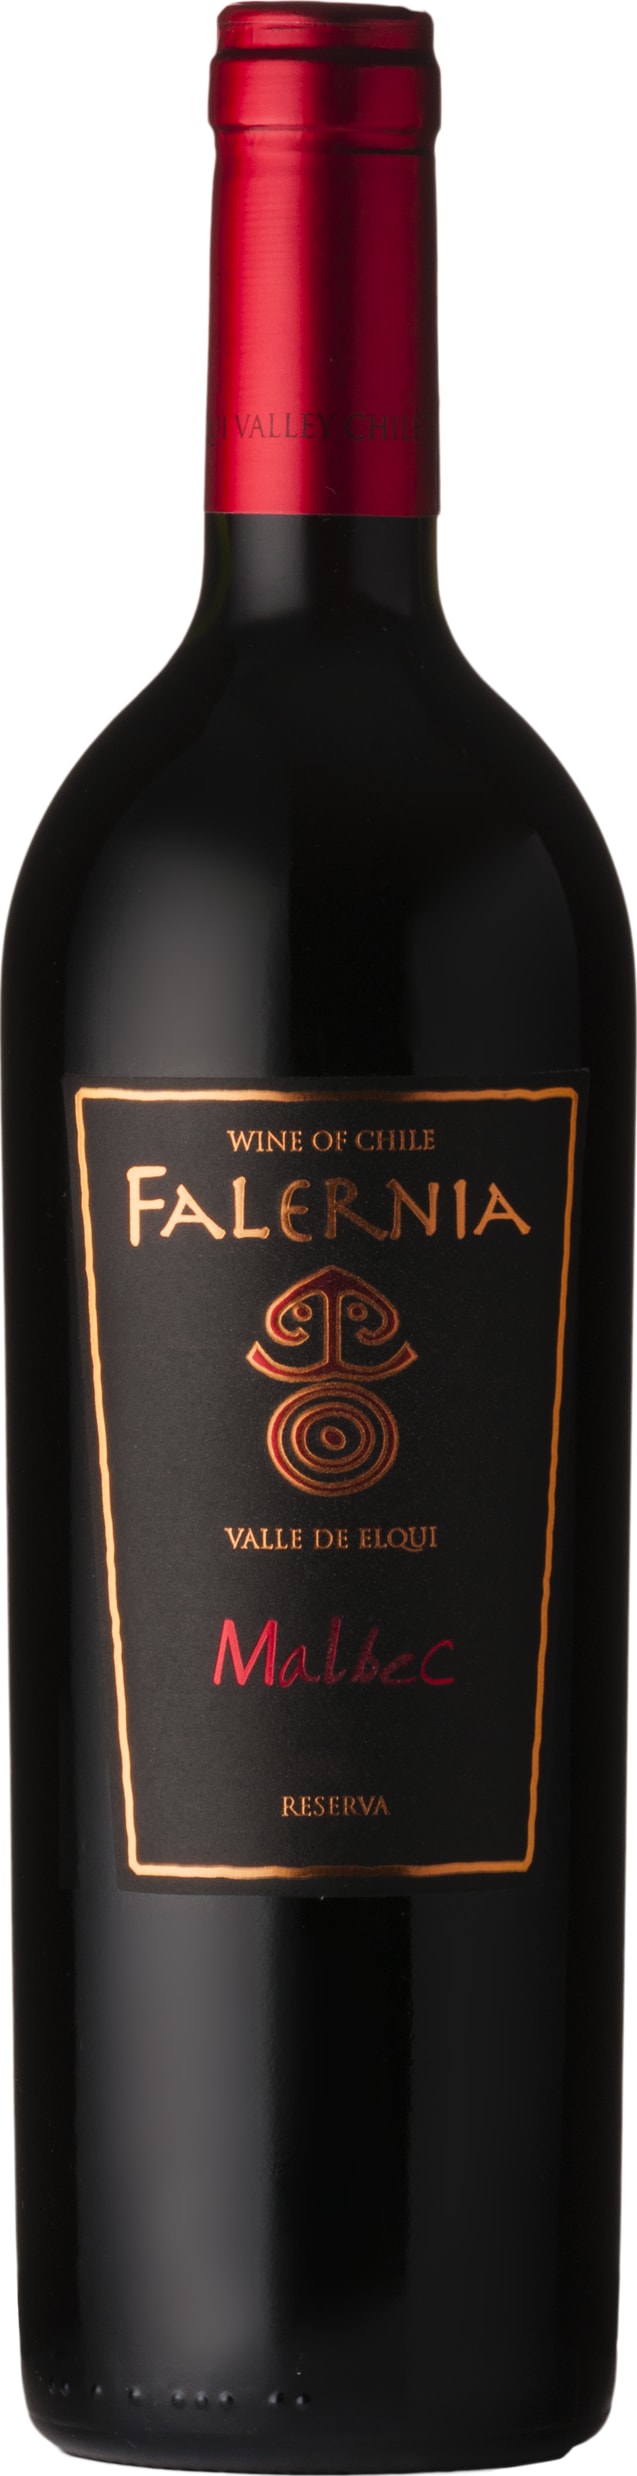 Vina Falernia Malbec Gran Reserva 2020 75cl - Buy Vina Falernia Wines from GREAT WINES DIRECT wine shop